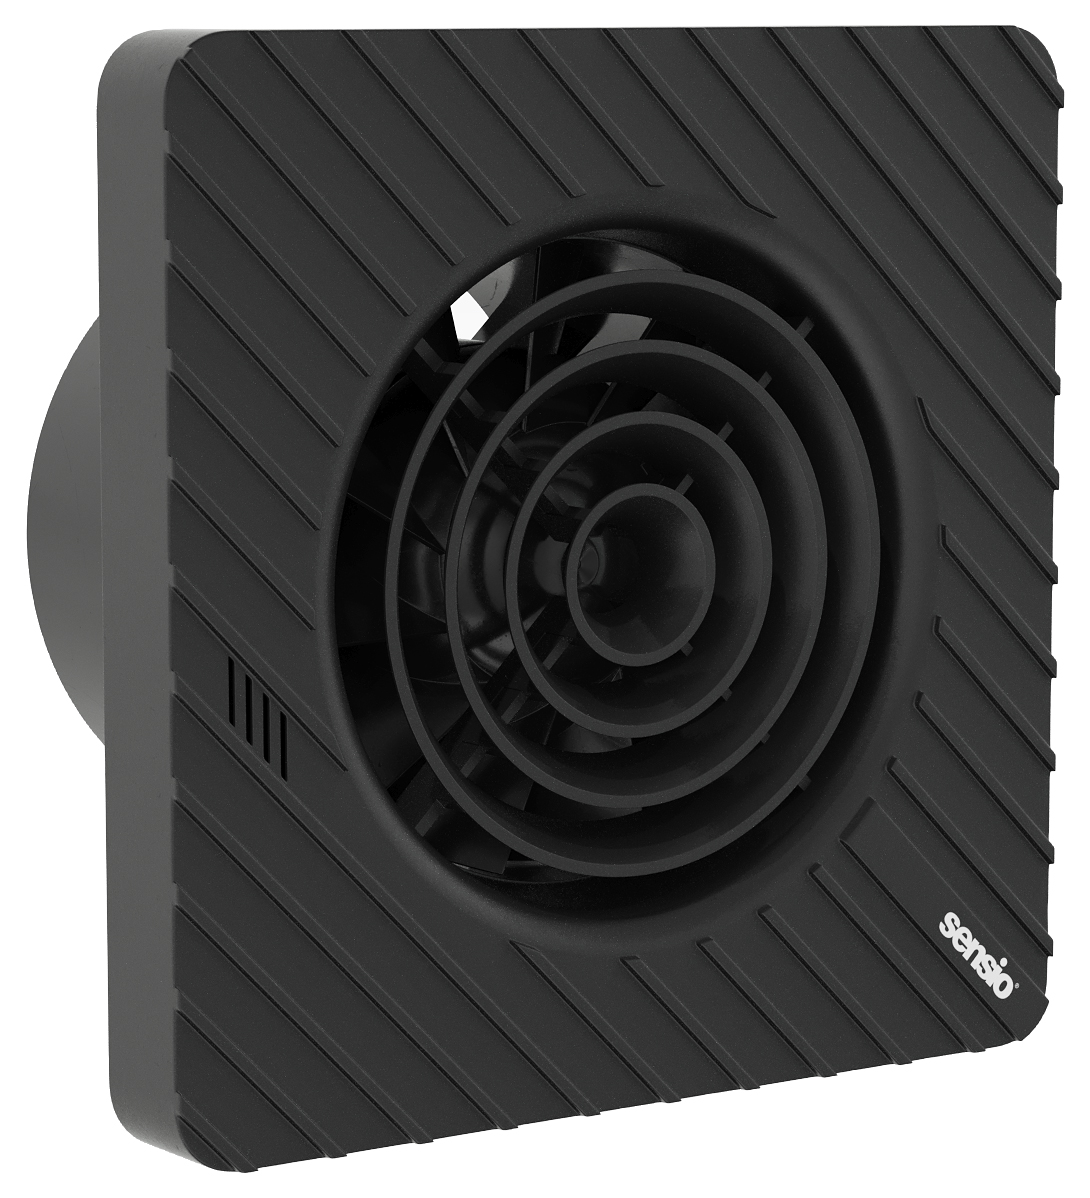 Image of Sensio Drax Black Wall Ventilation Fan with Aquilo Ventilation Ducting Kit - ø100mm